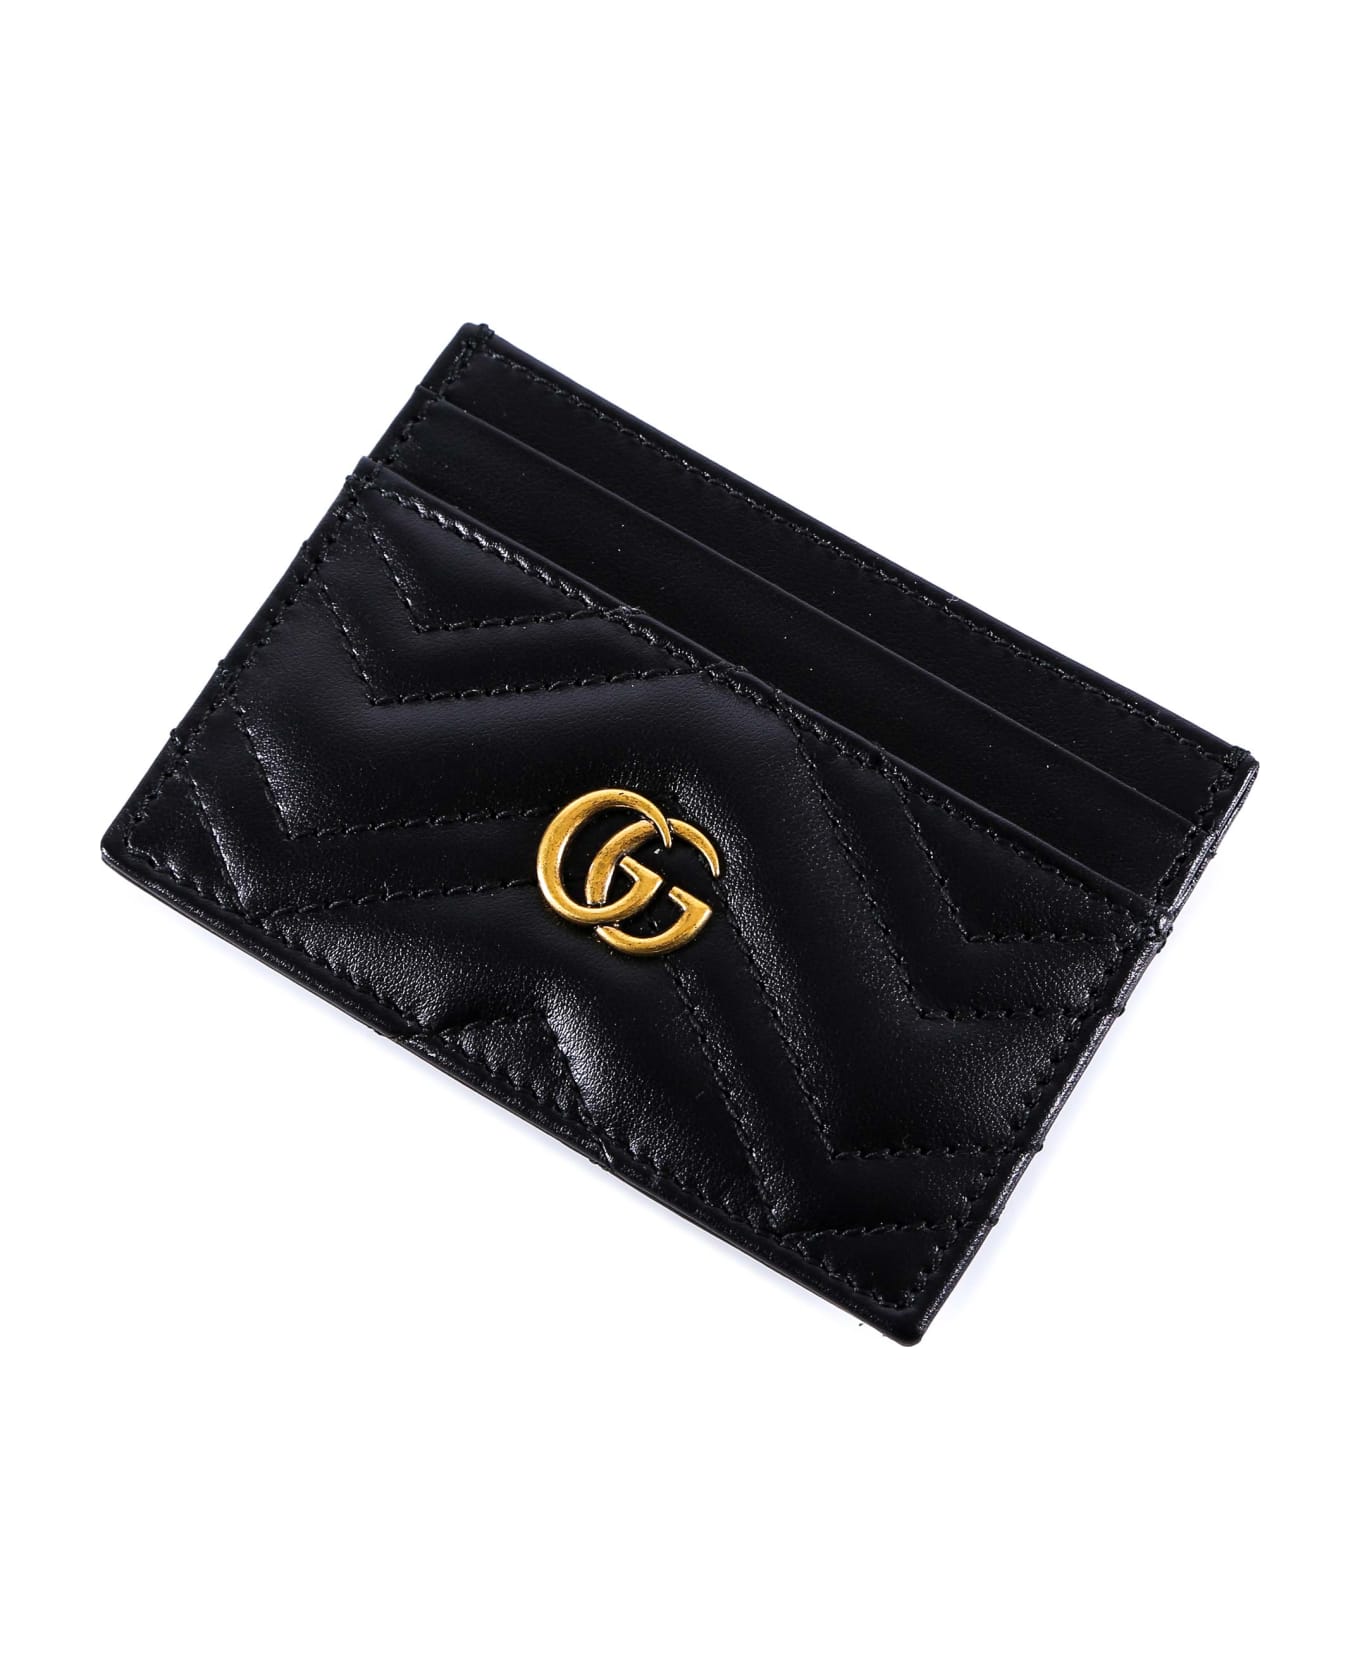 Gucci Card Holder - Black